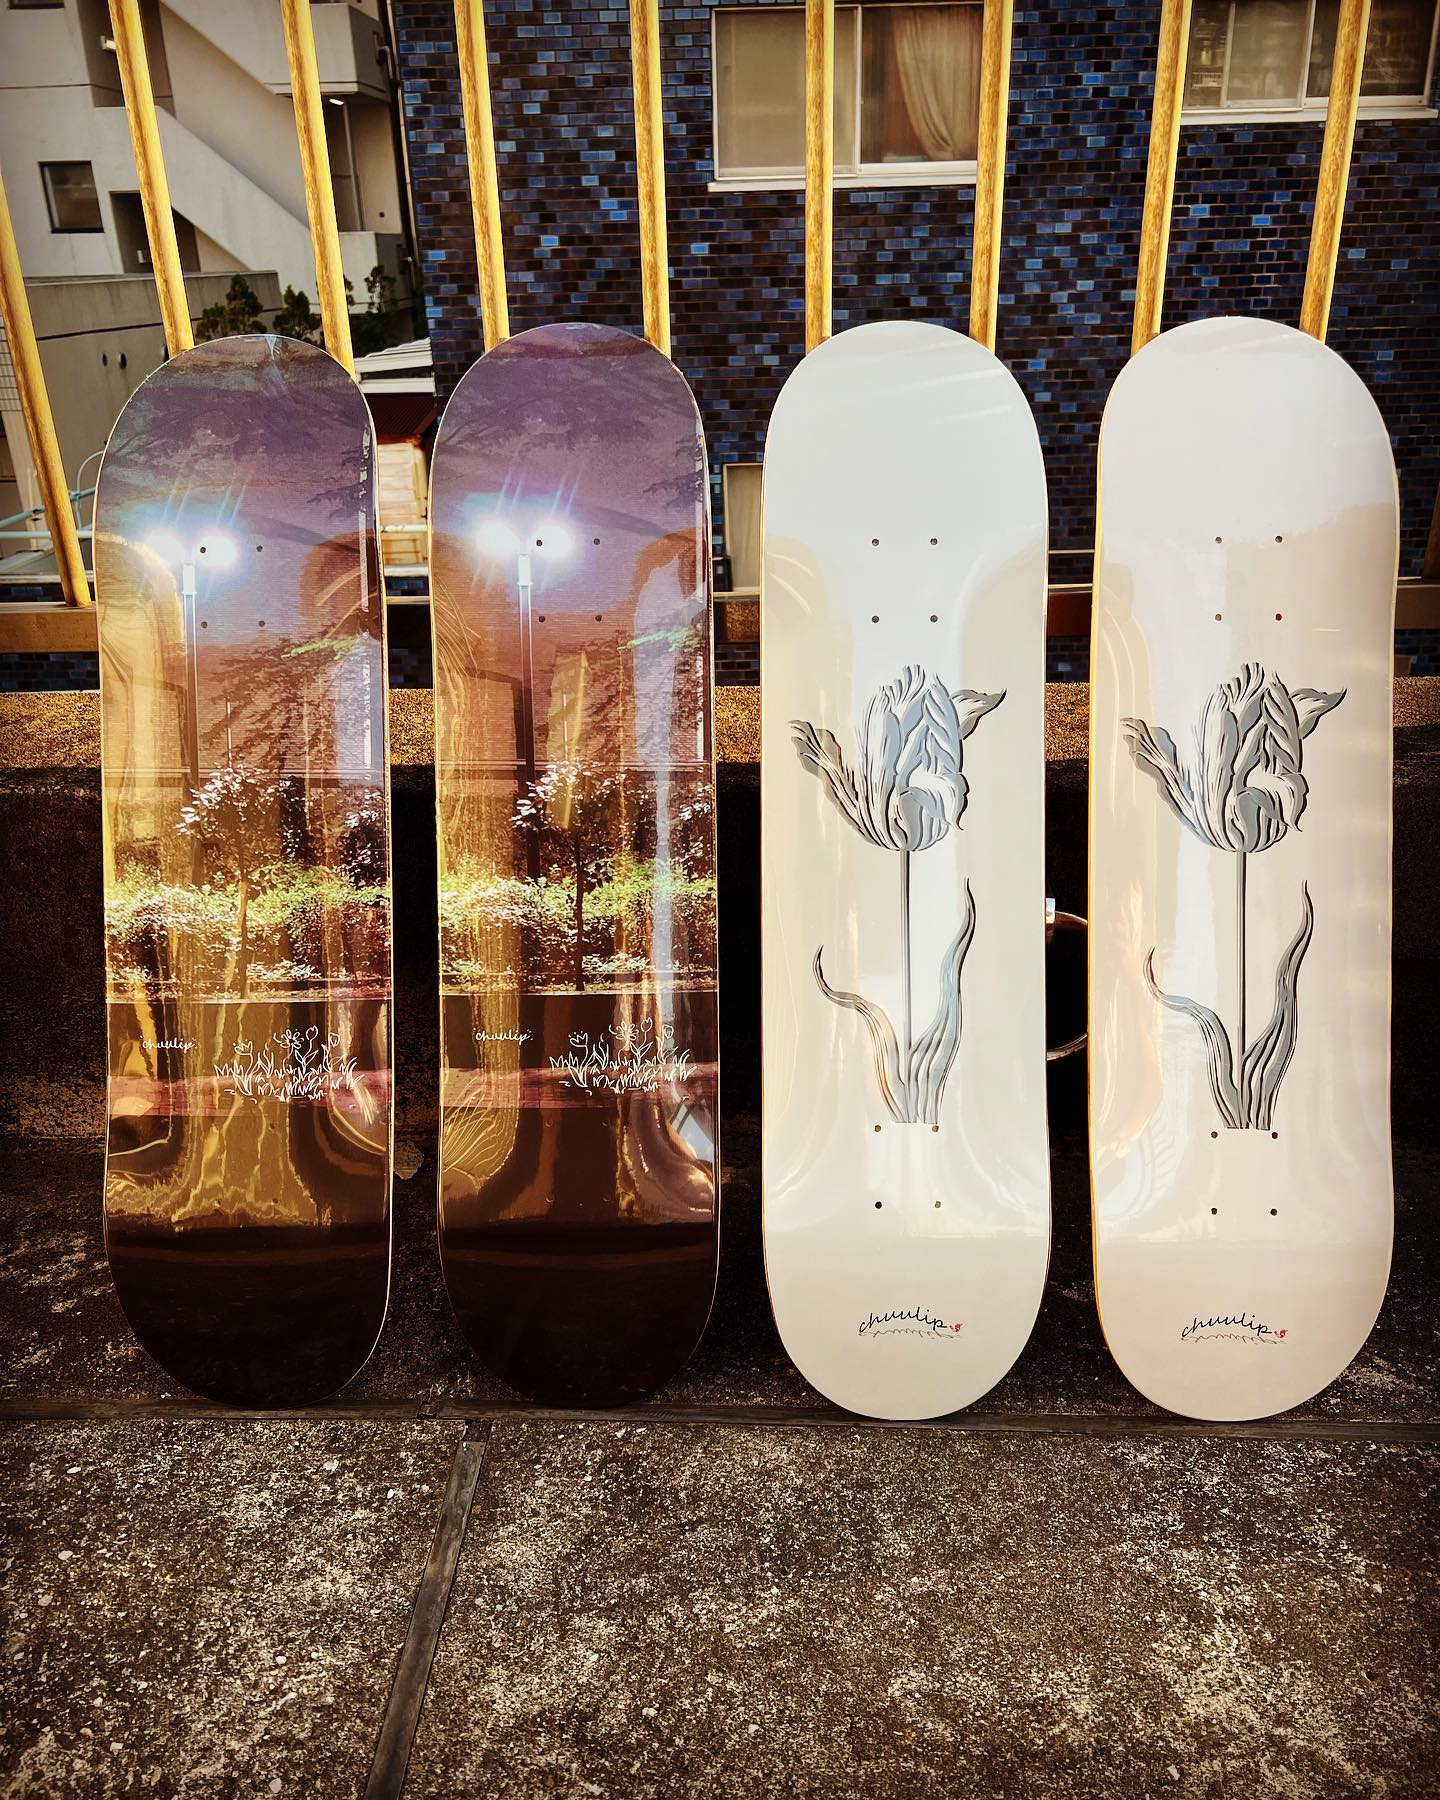 New @chuulip_skateboards Boards.自由と遊びをテーマに都内に拠点を置き活動するCHUULIP SKATEBOARDS。Instantのflow @joetarosaito もチームメイト🤝Art workは代表の渡部将太ことTABEちゃんが手掛ける。#chuulipskateboards